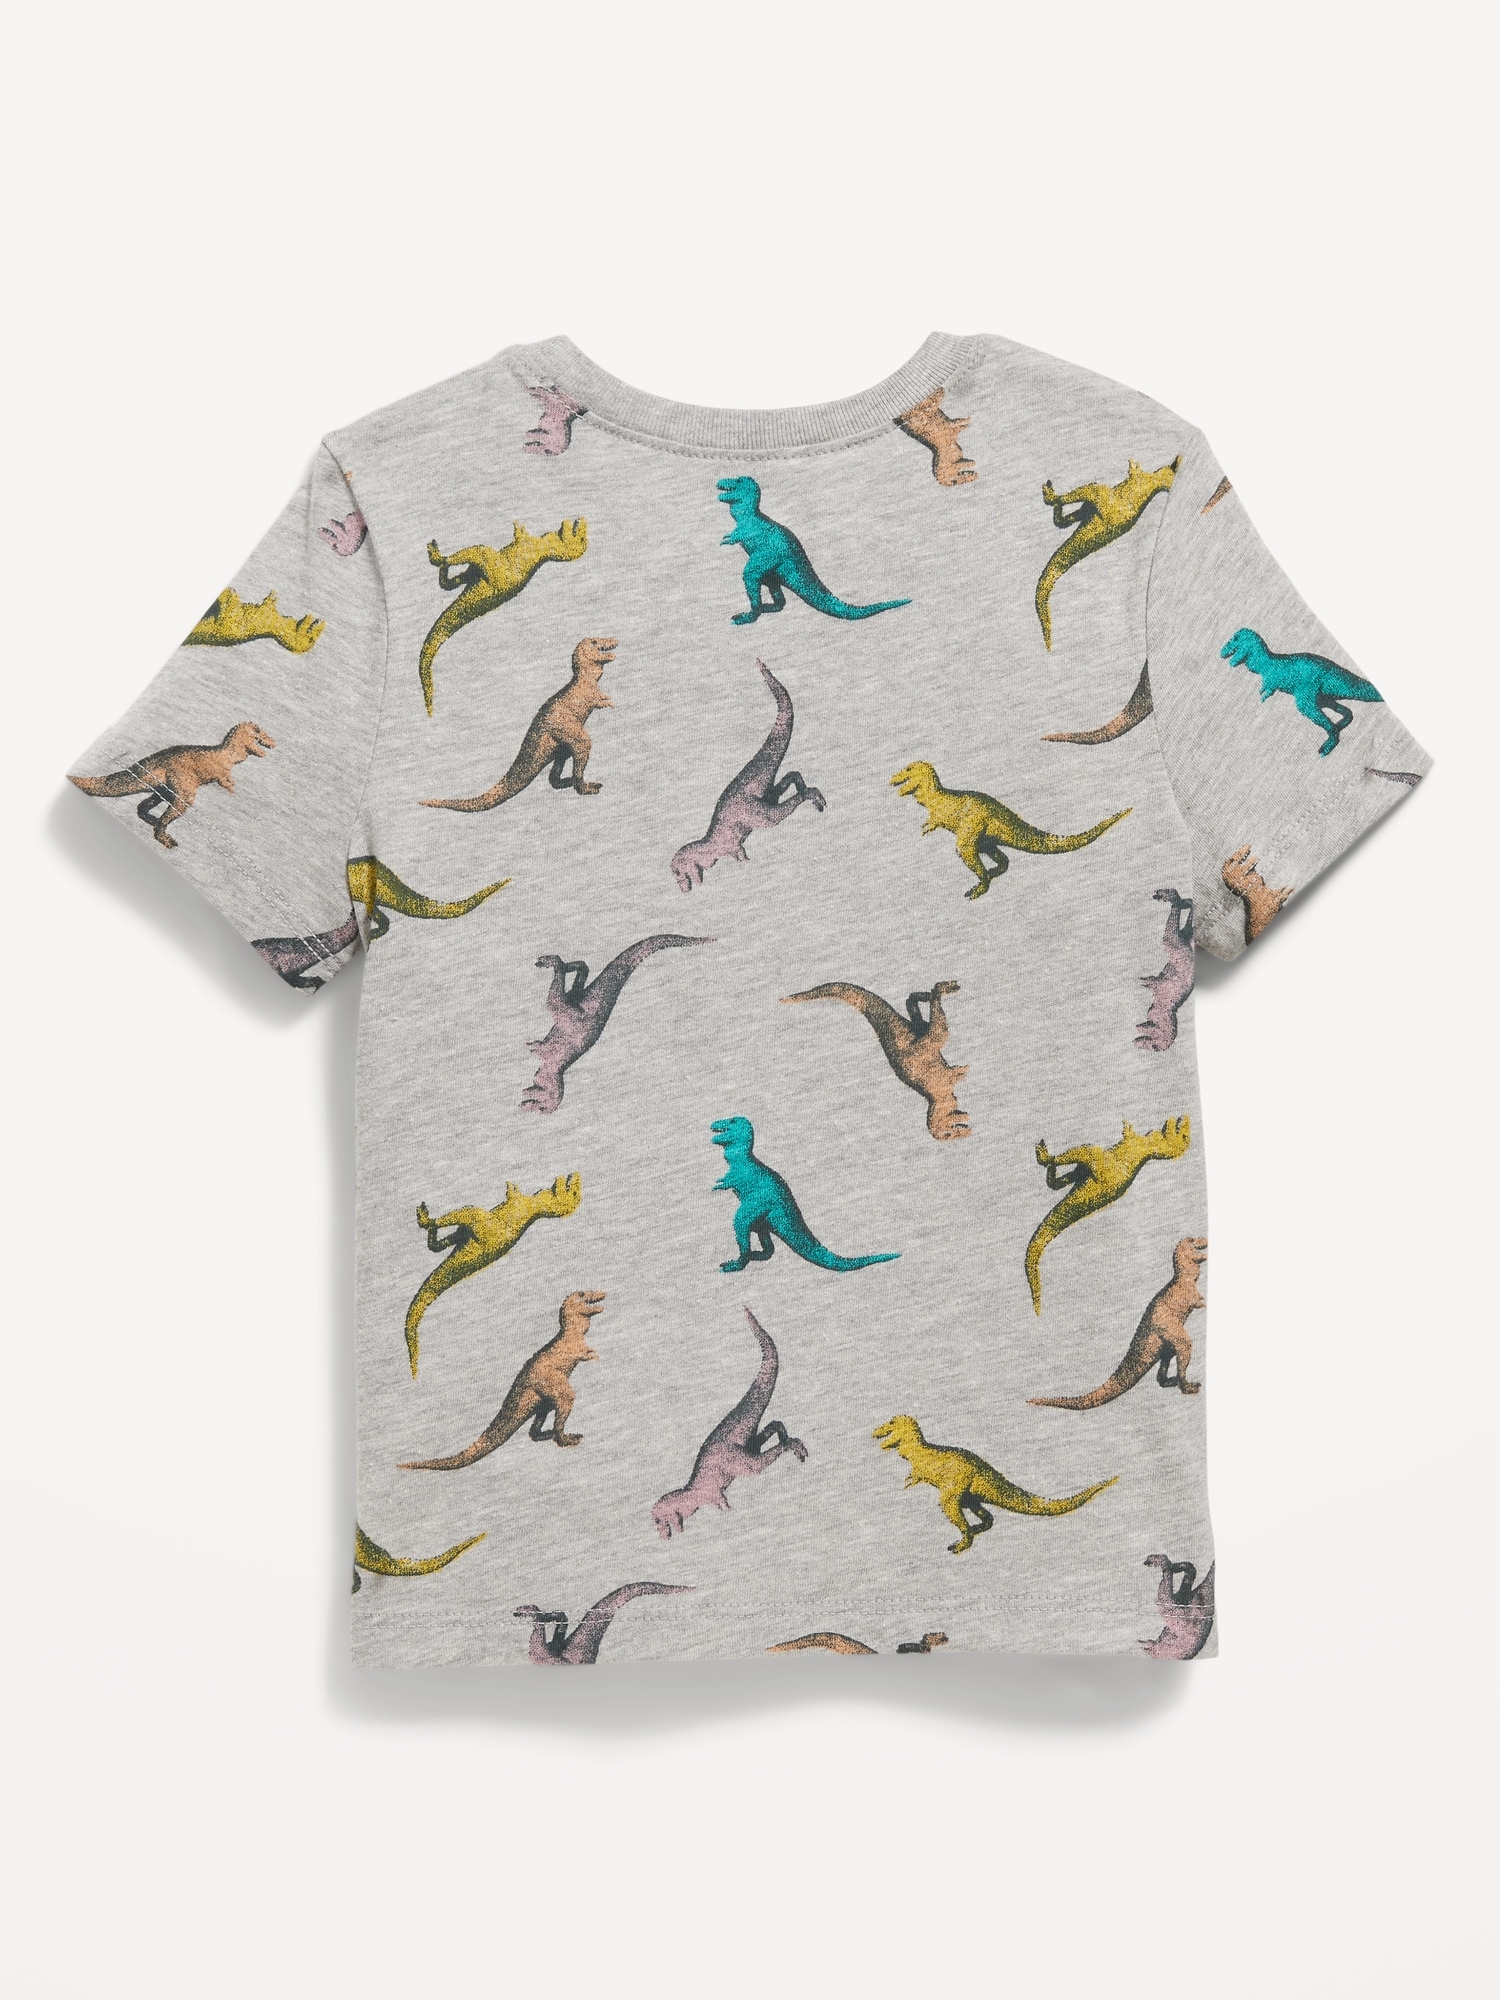 Unisex Short-Sleeve Dino-Print T-Shirt for Toddler | Old Navy